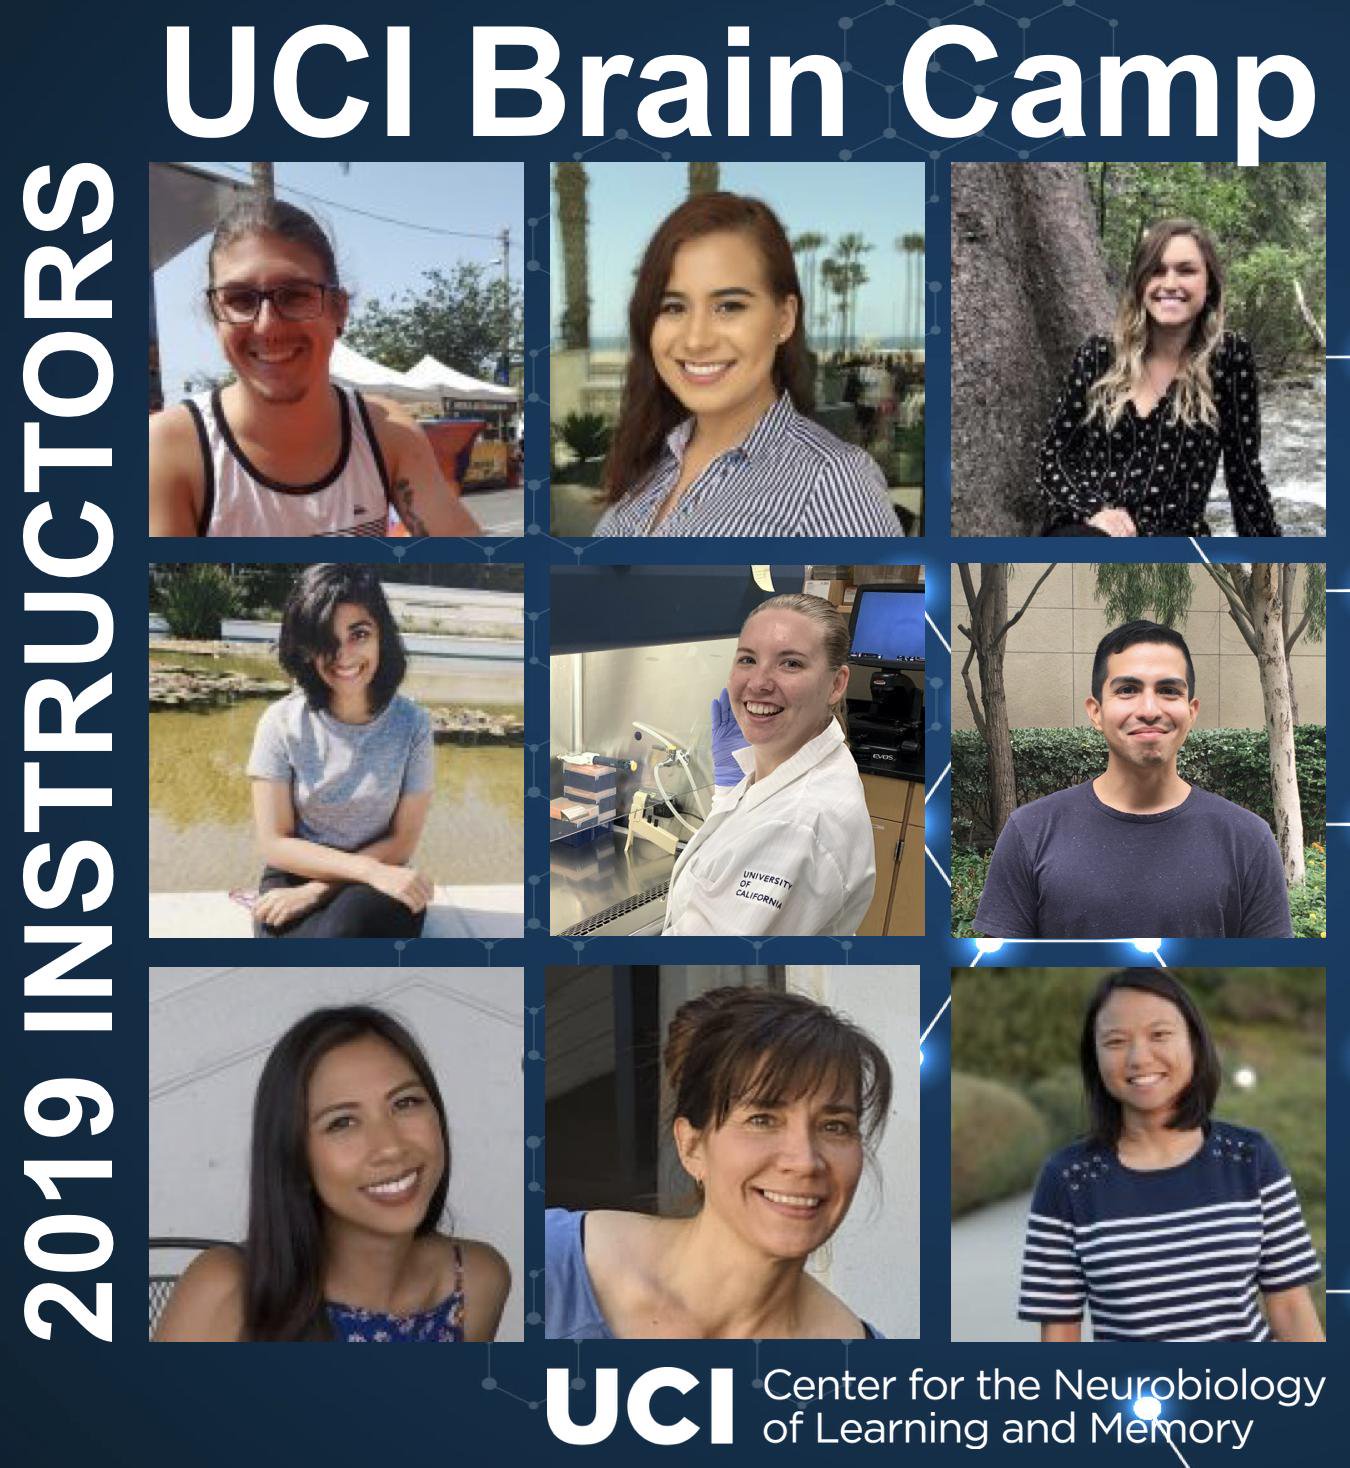 UCI Brain Camp instructors